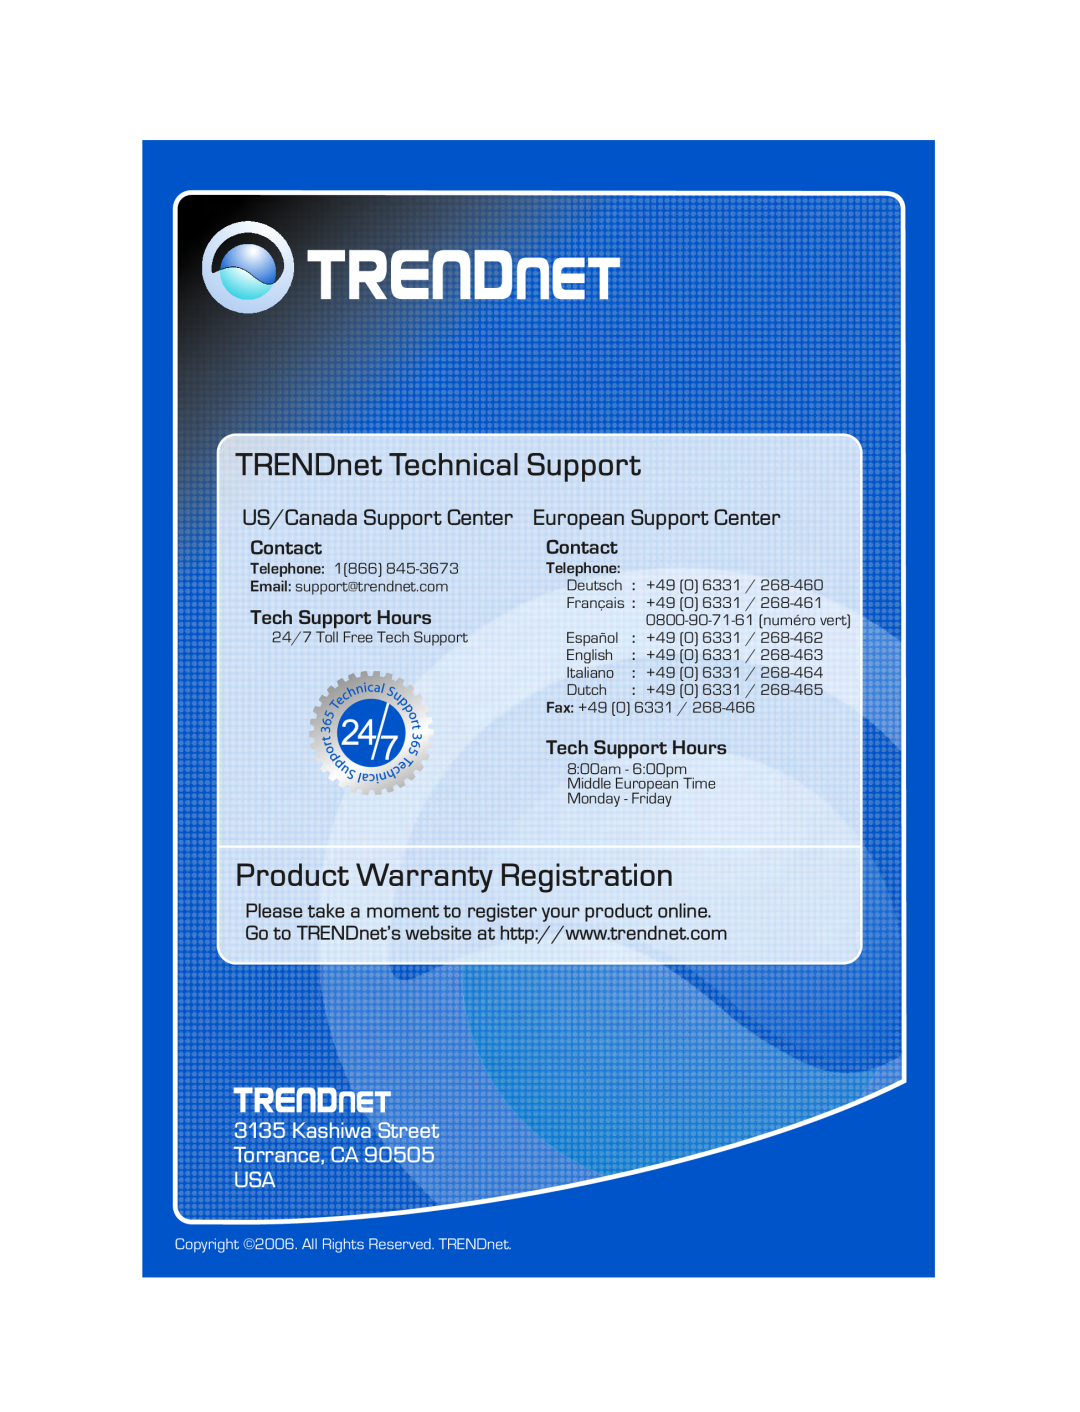 TRENDnet TK-200K manual TRENDnet Technical Support, Product Warranty Registration, Kashiwa Street Torrance, CA USA, Contact 